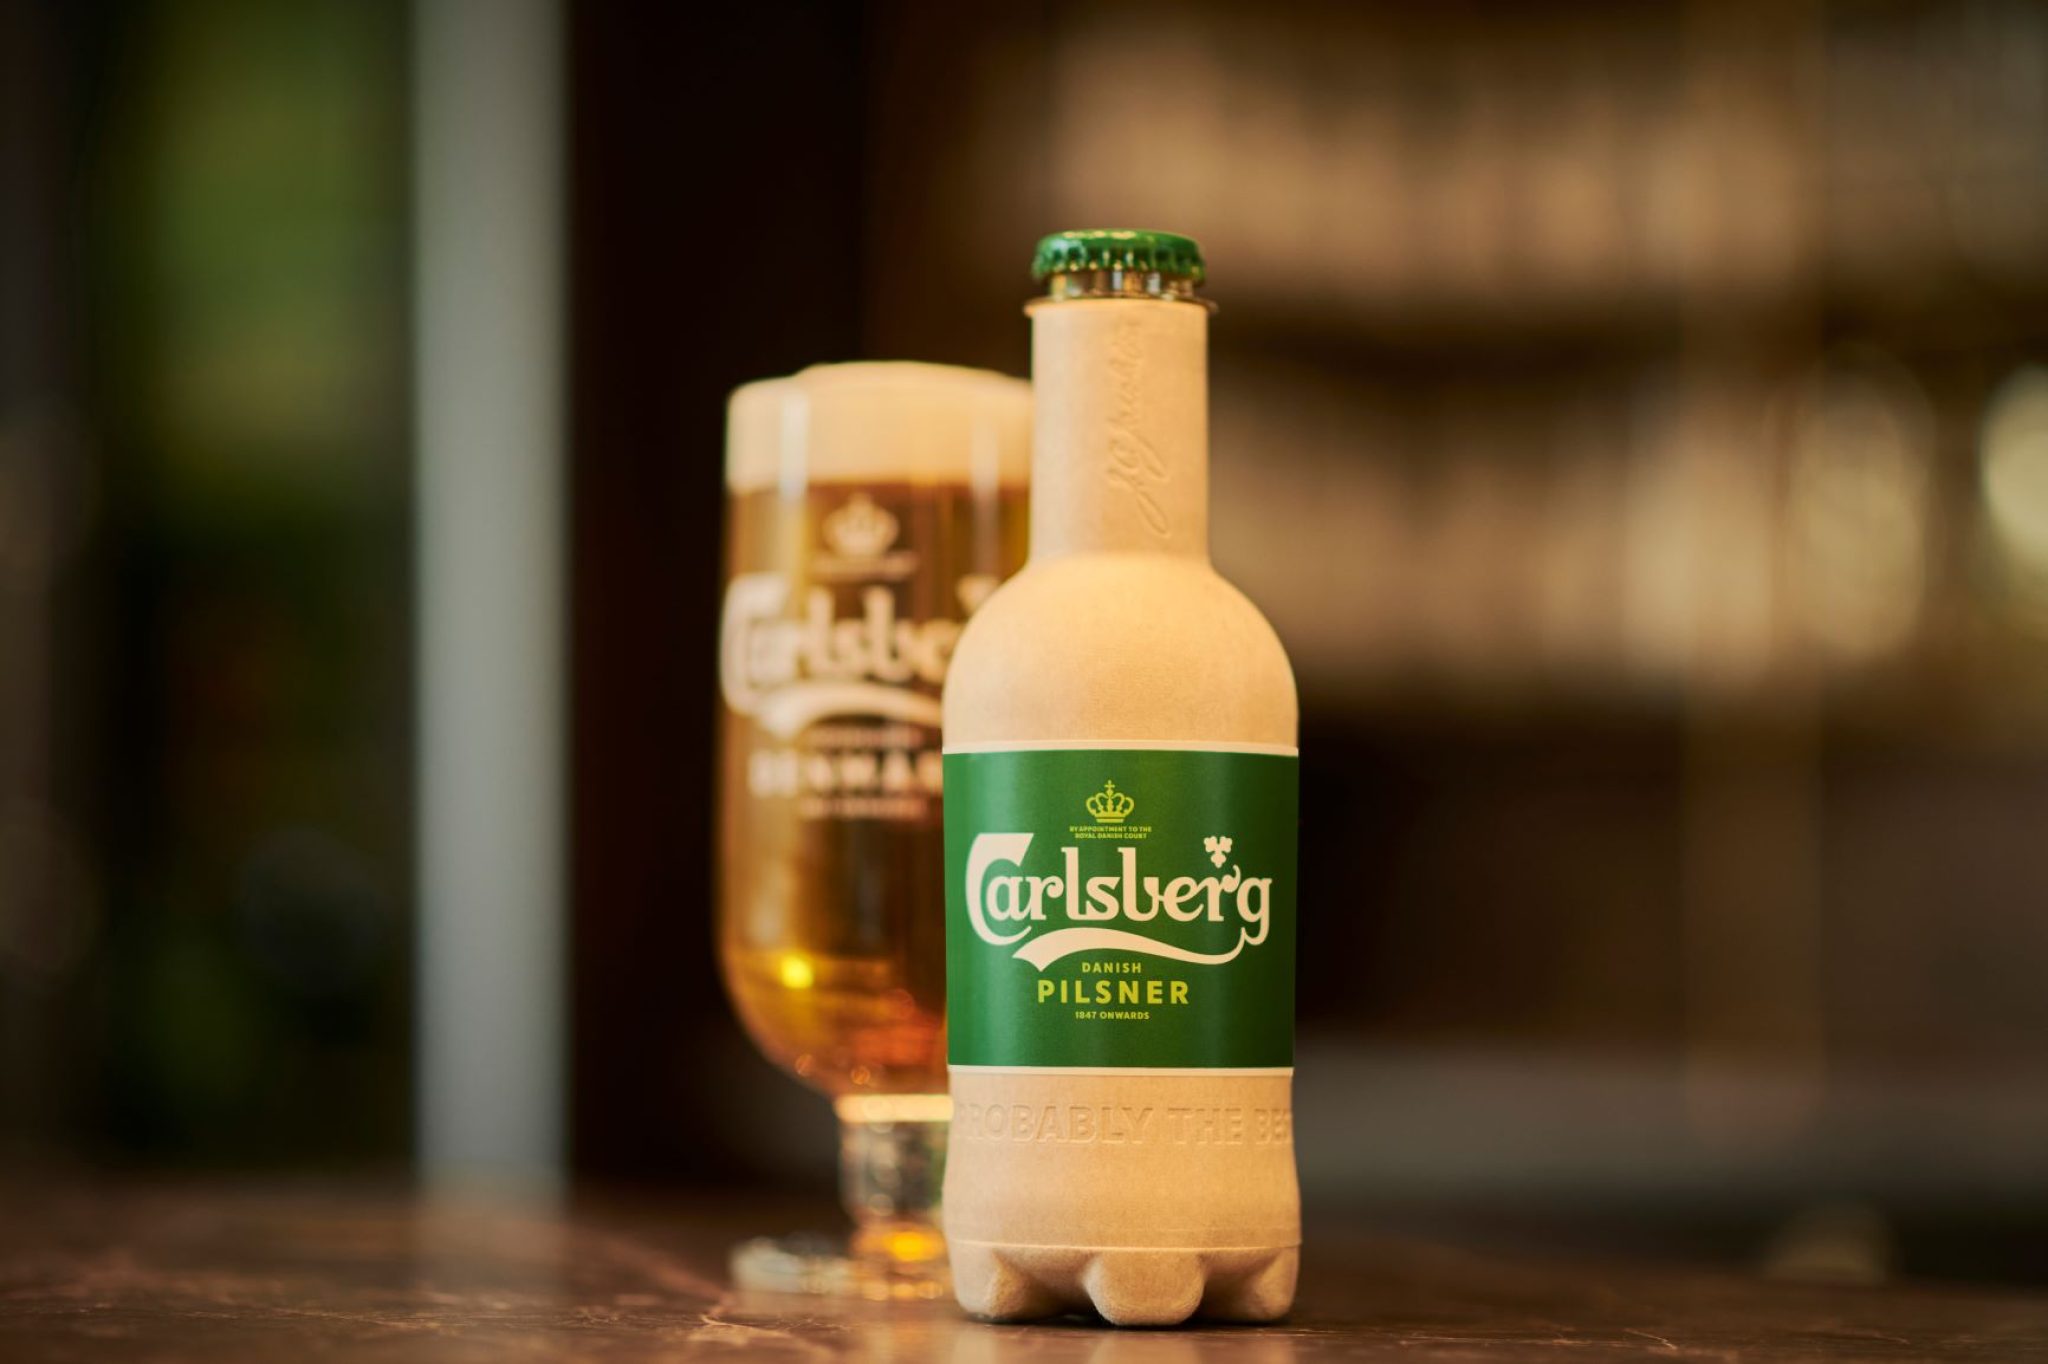 Carlsberg is testing its fibre bottle as part of efforts to make packaging greener